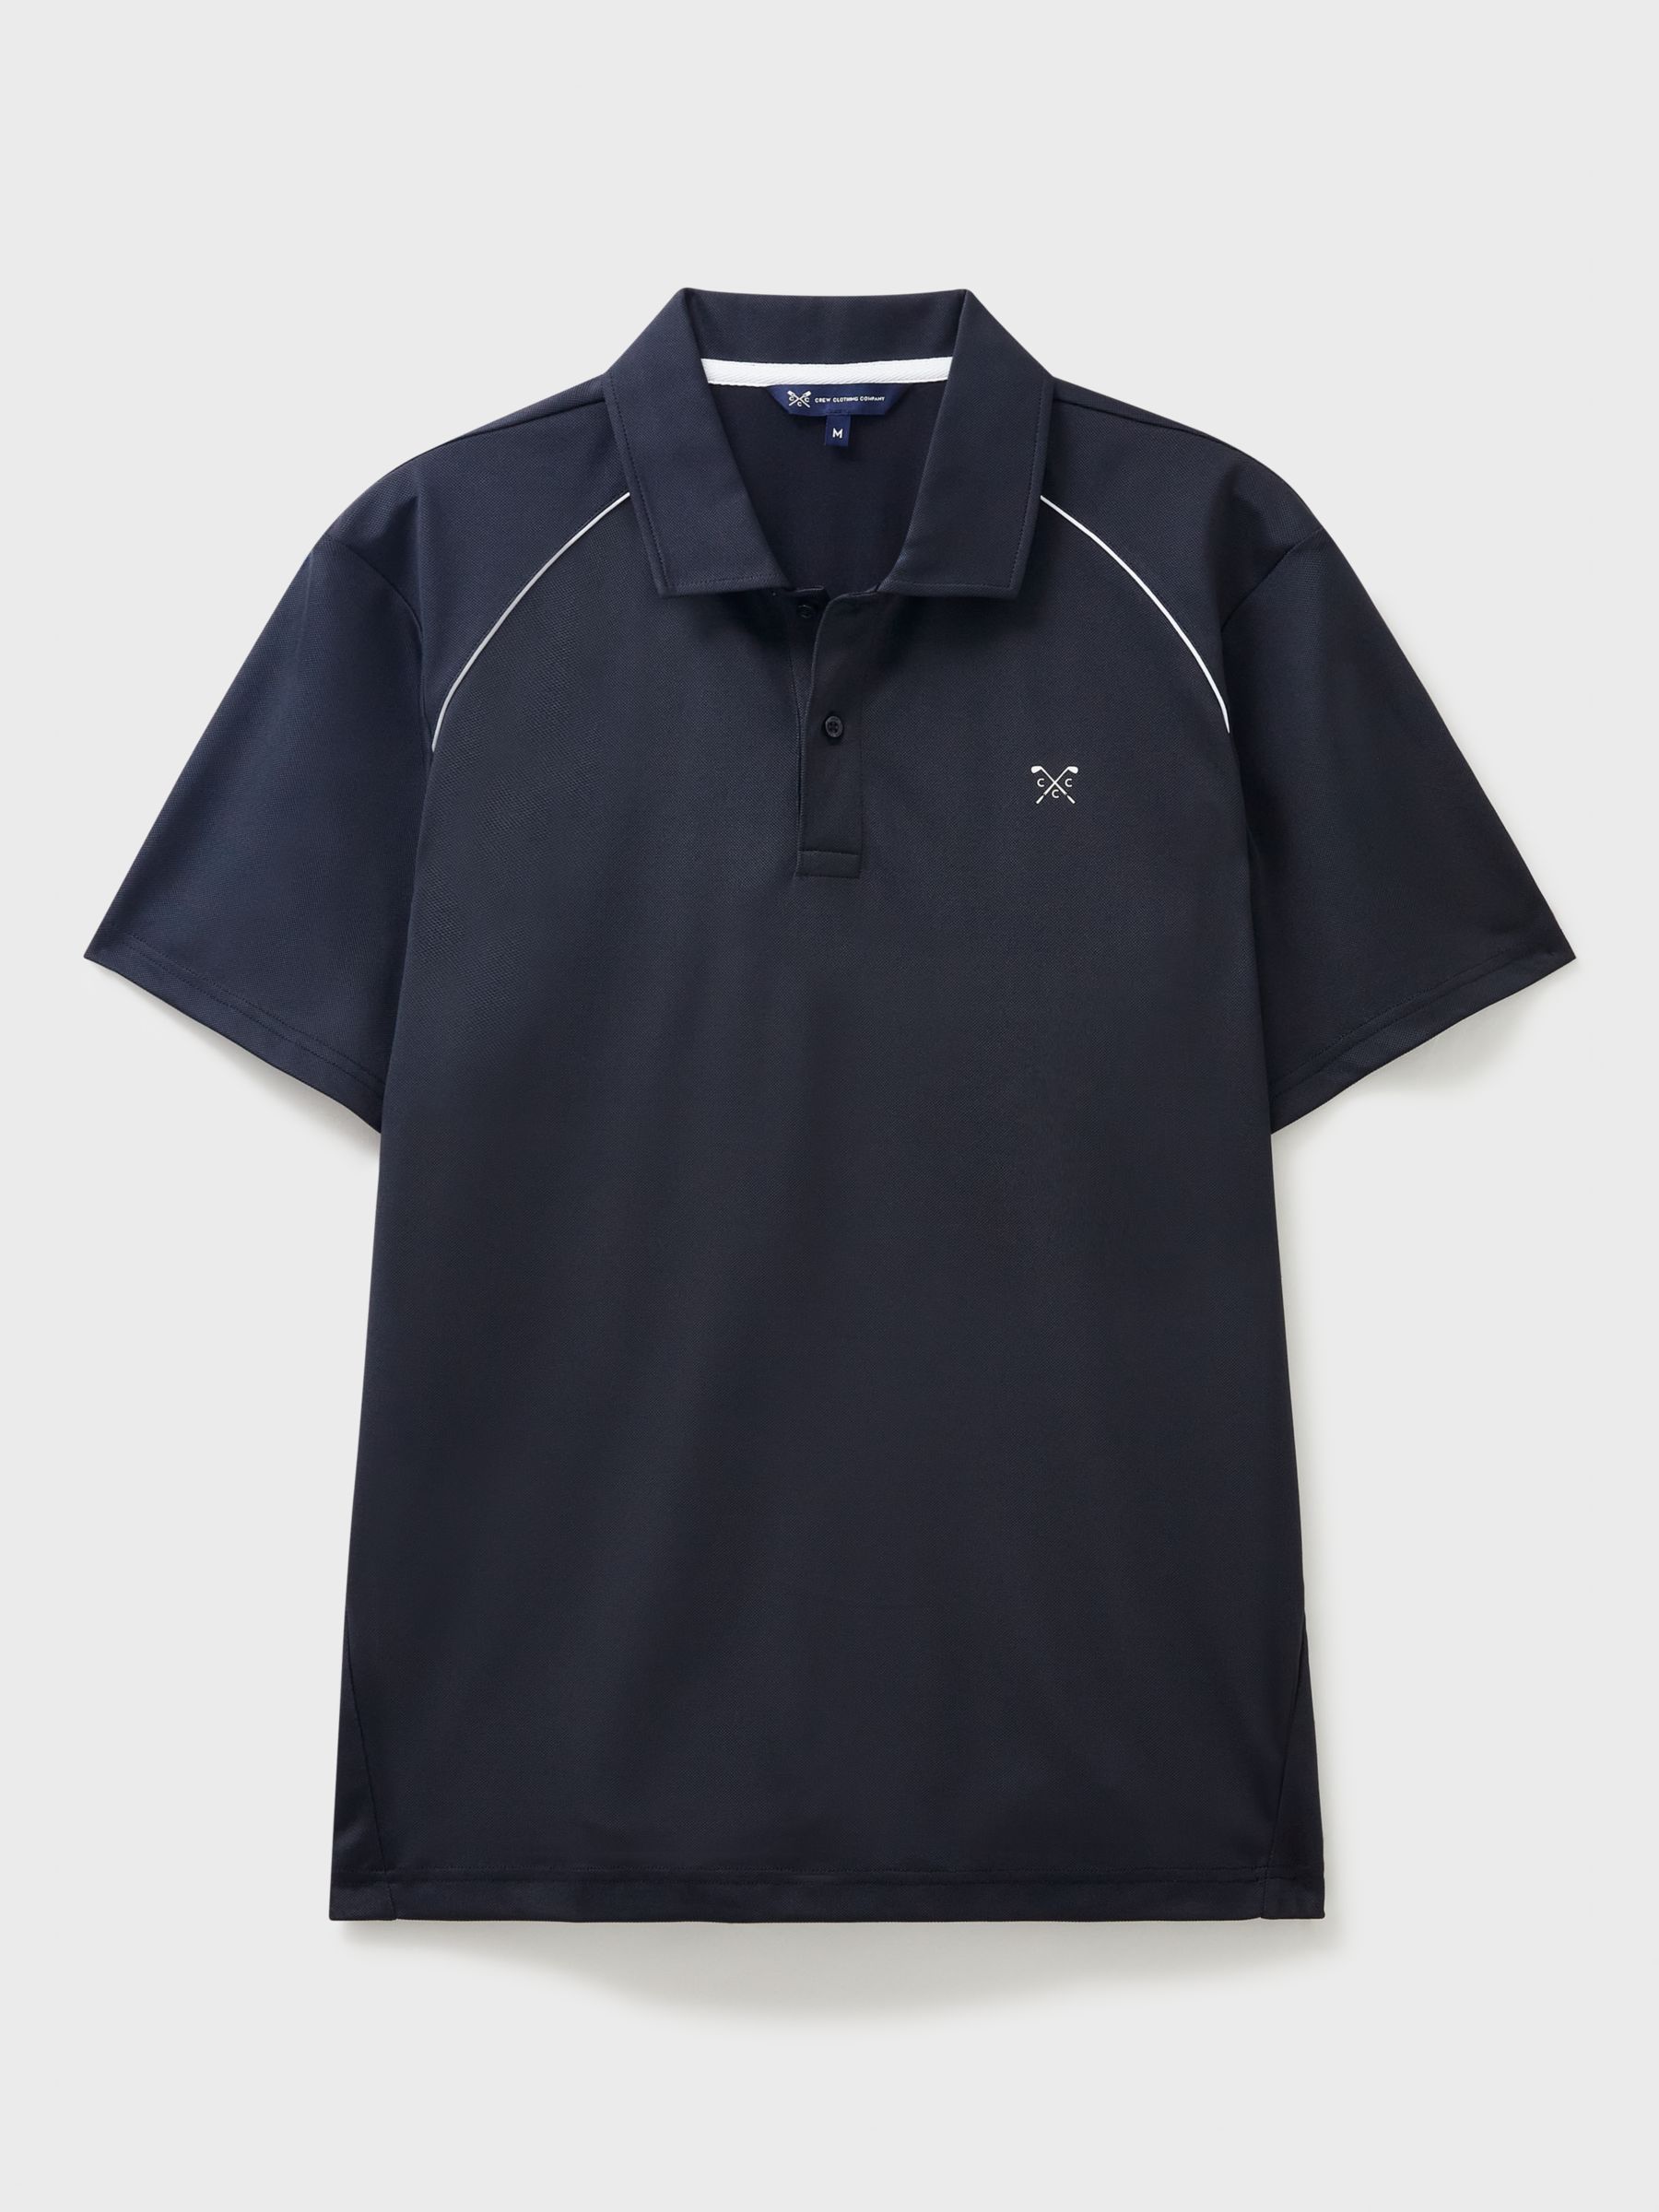 Crew Clothing Stretch Pique Golf Polo Top, Black, XS